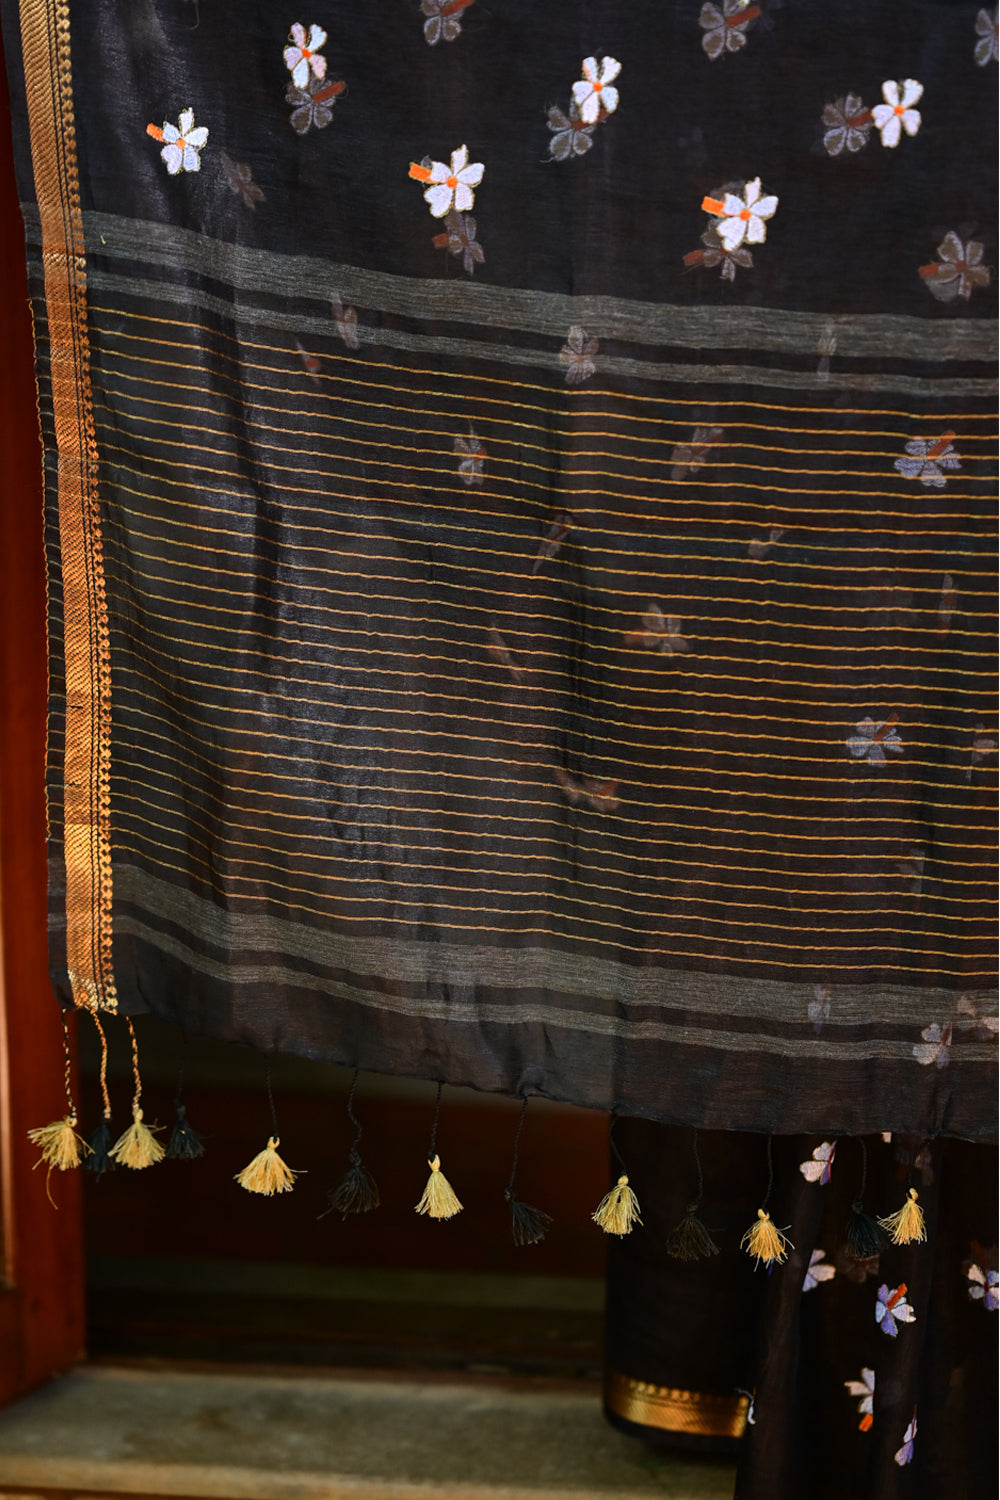 Parijaat - The Eternal Flower : Embroidery on Black Silk Linen Saree